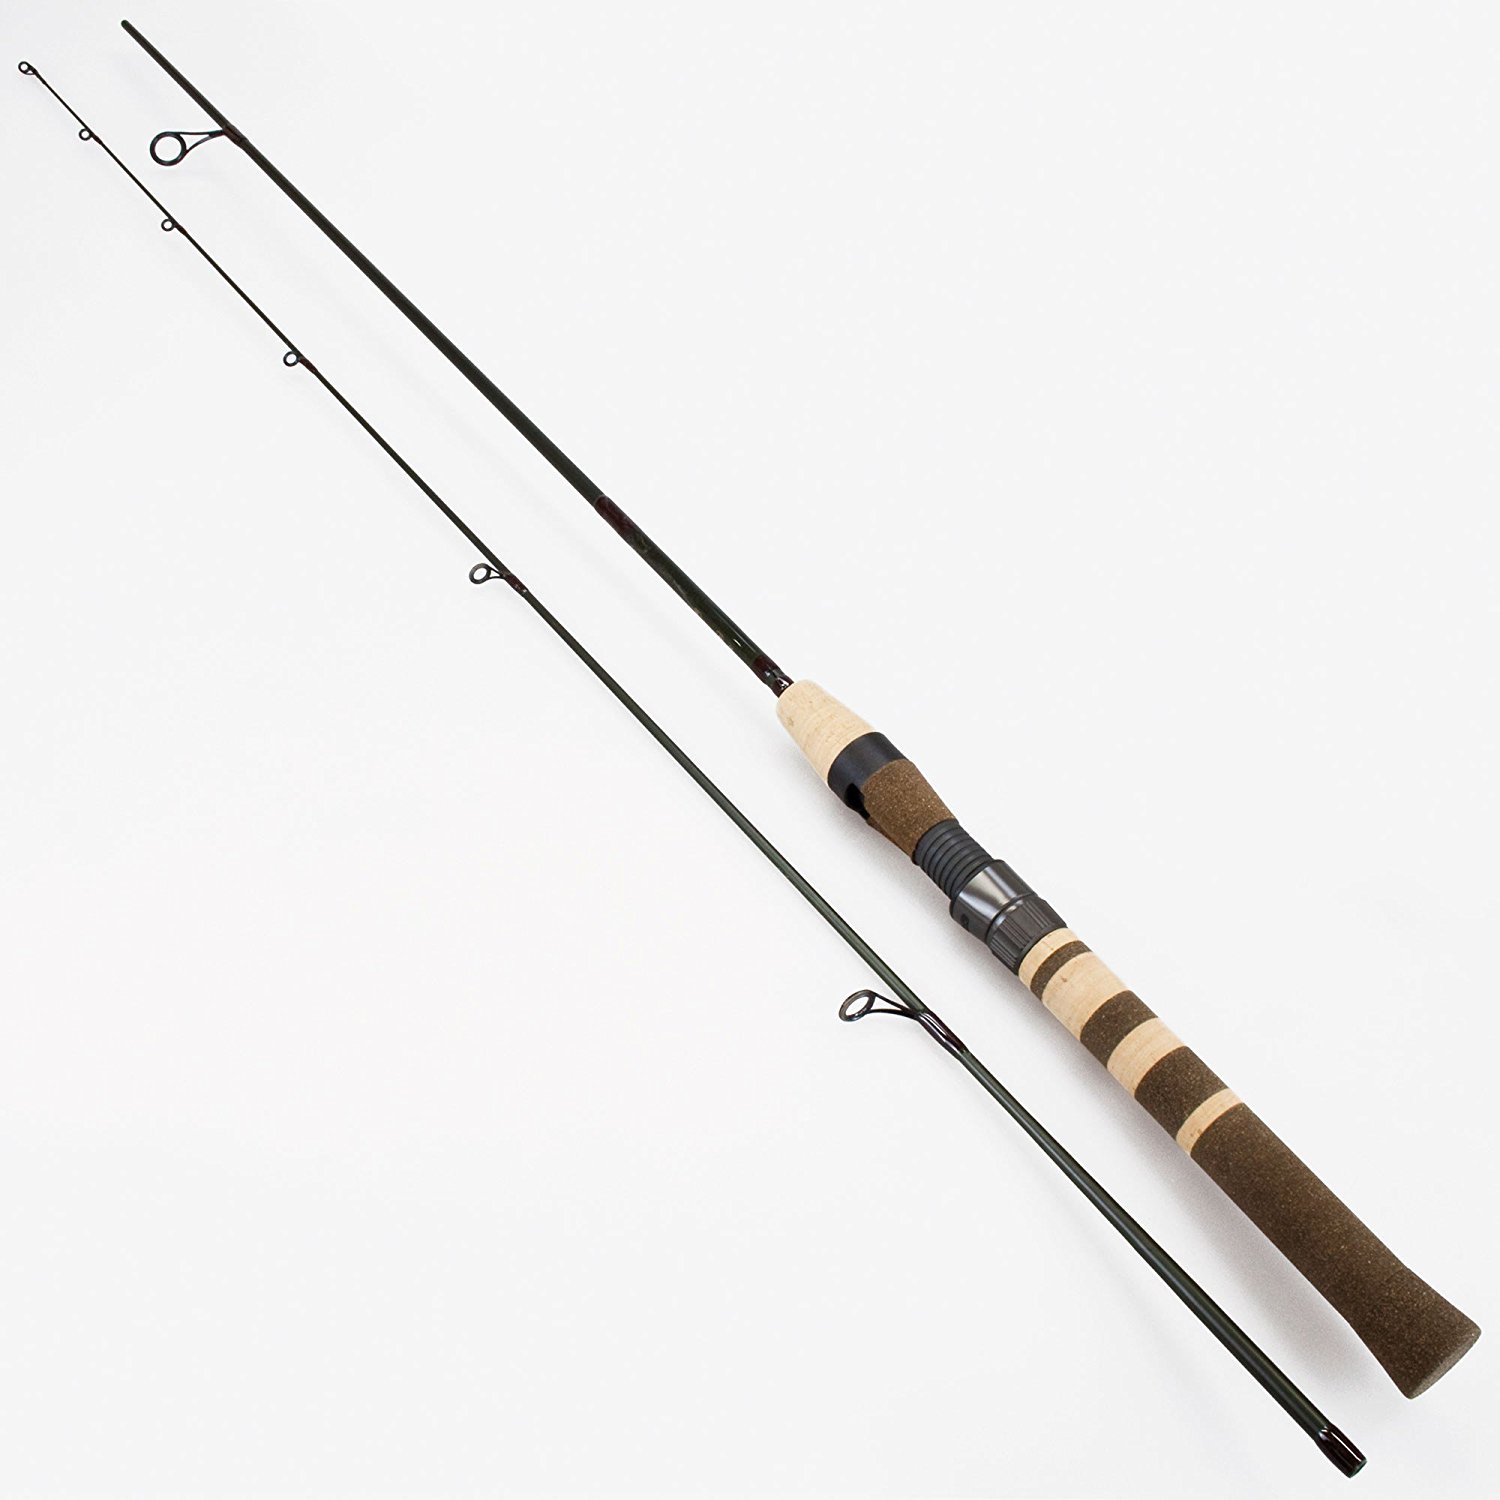 Amazon.com : G loomis Trout/Panfish Spinning Fishing Rod TSR7402 ...